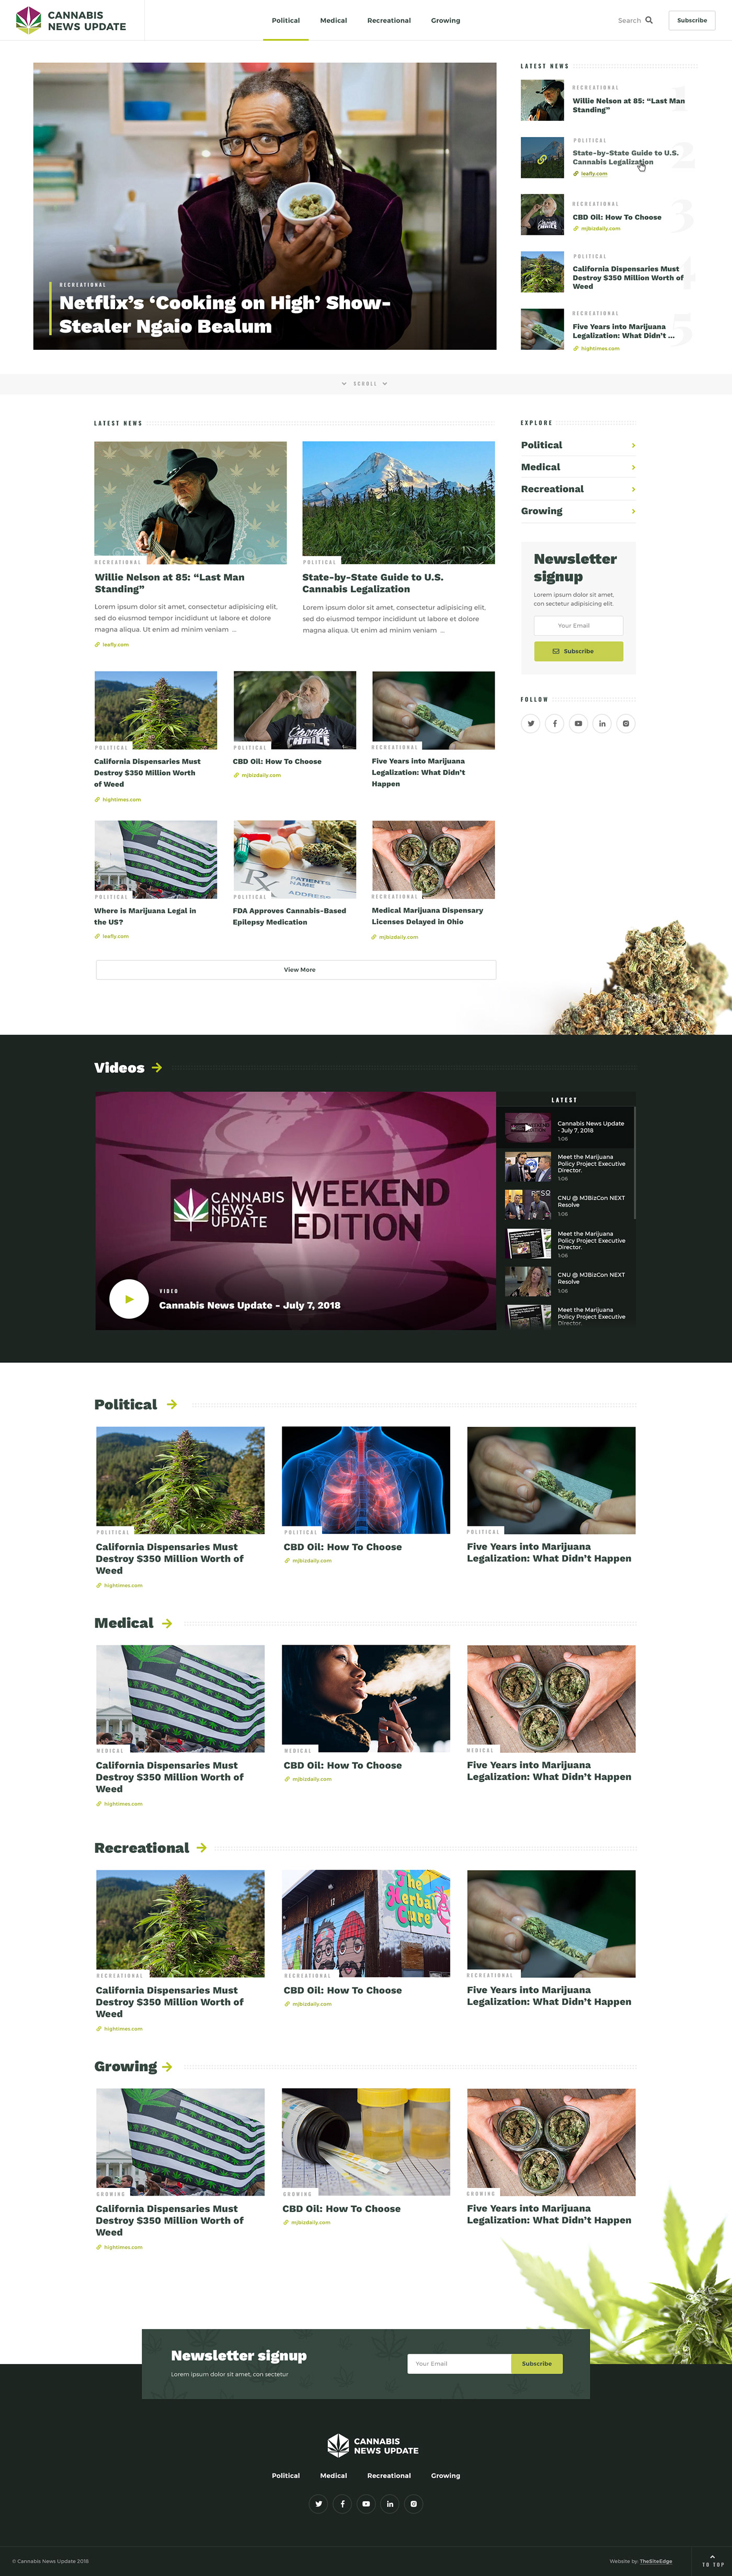 cannabis marijuana smoke weed pot Blog news article Medicinal green